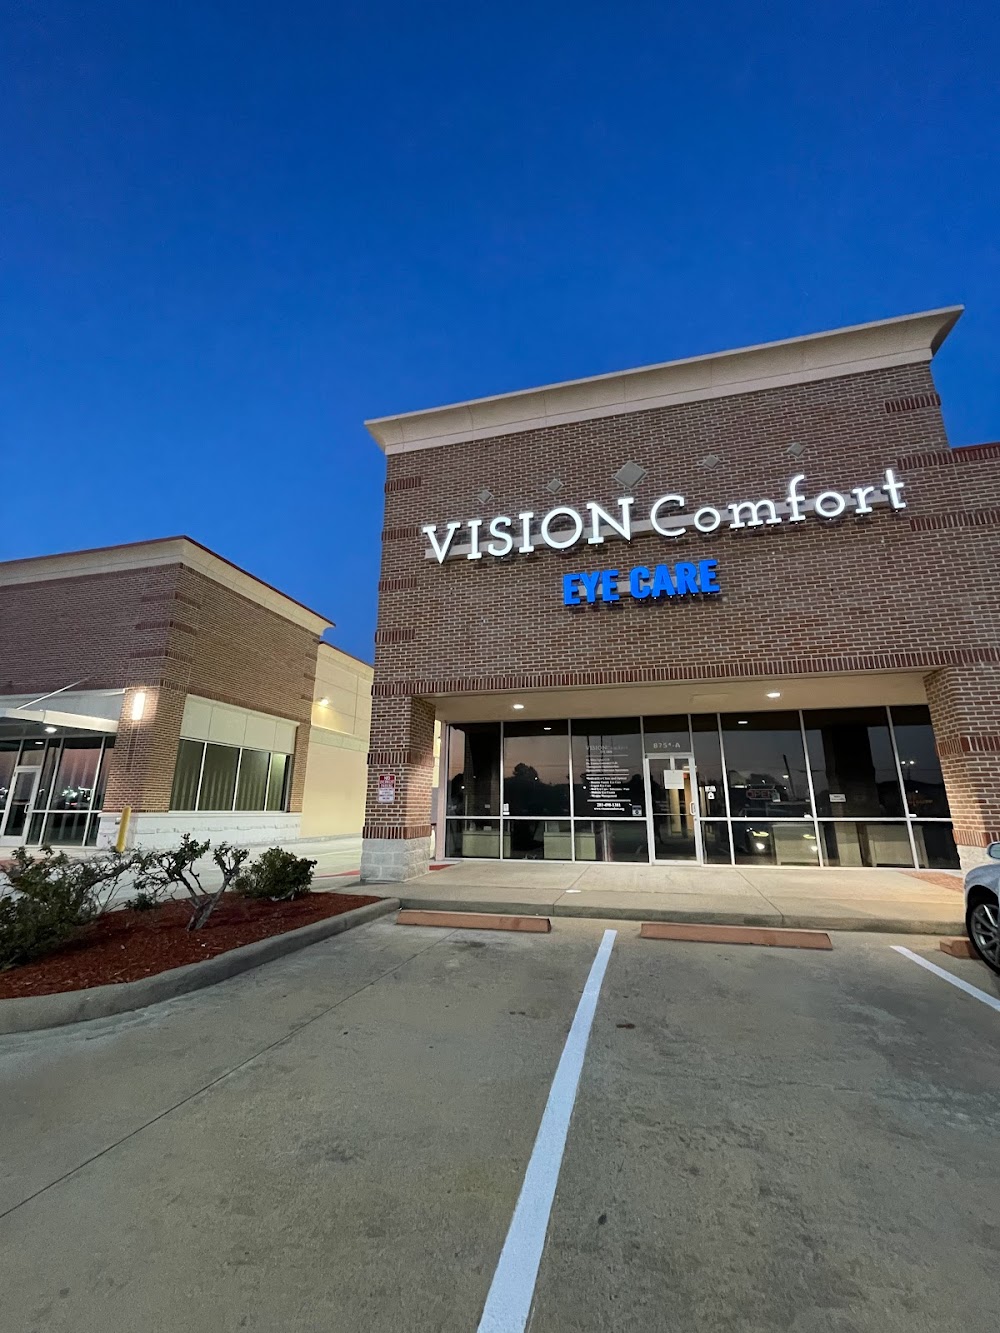 Vision Comfort Eye Care